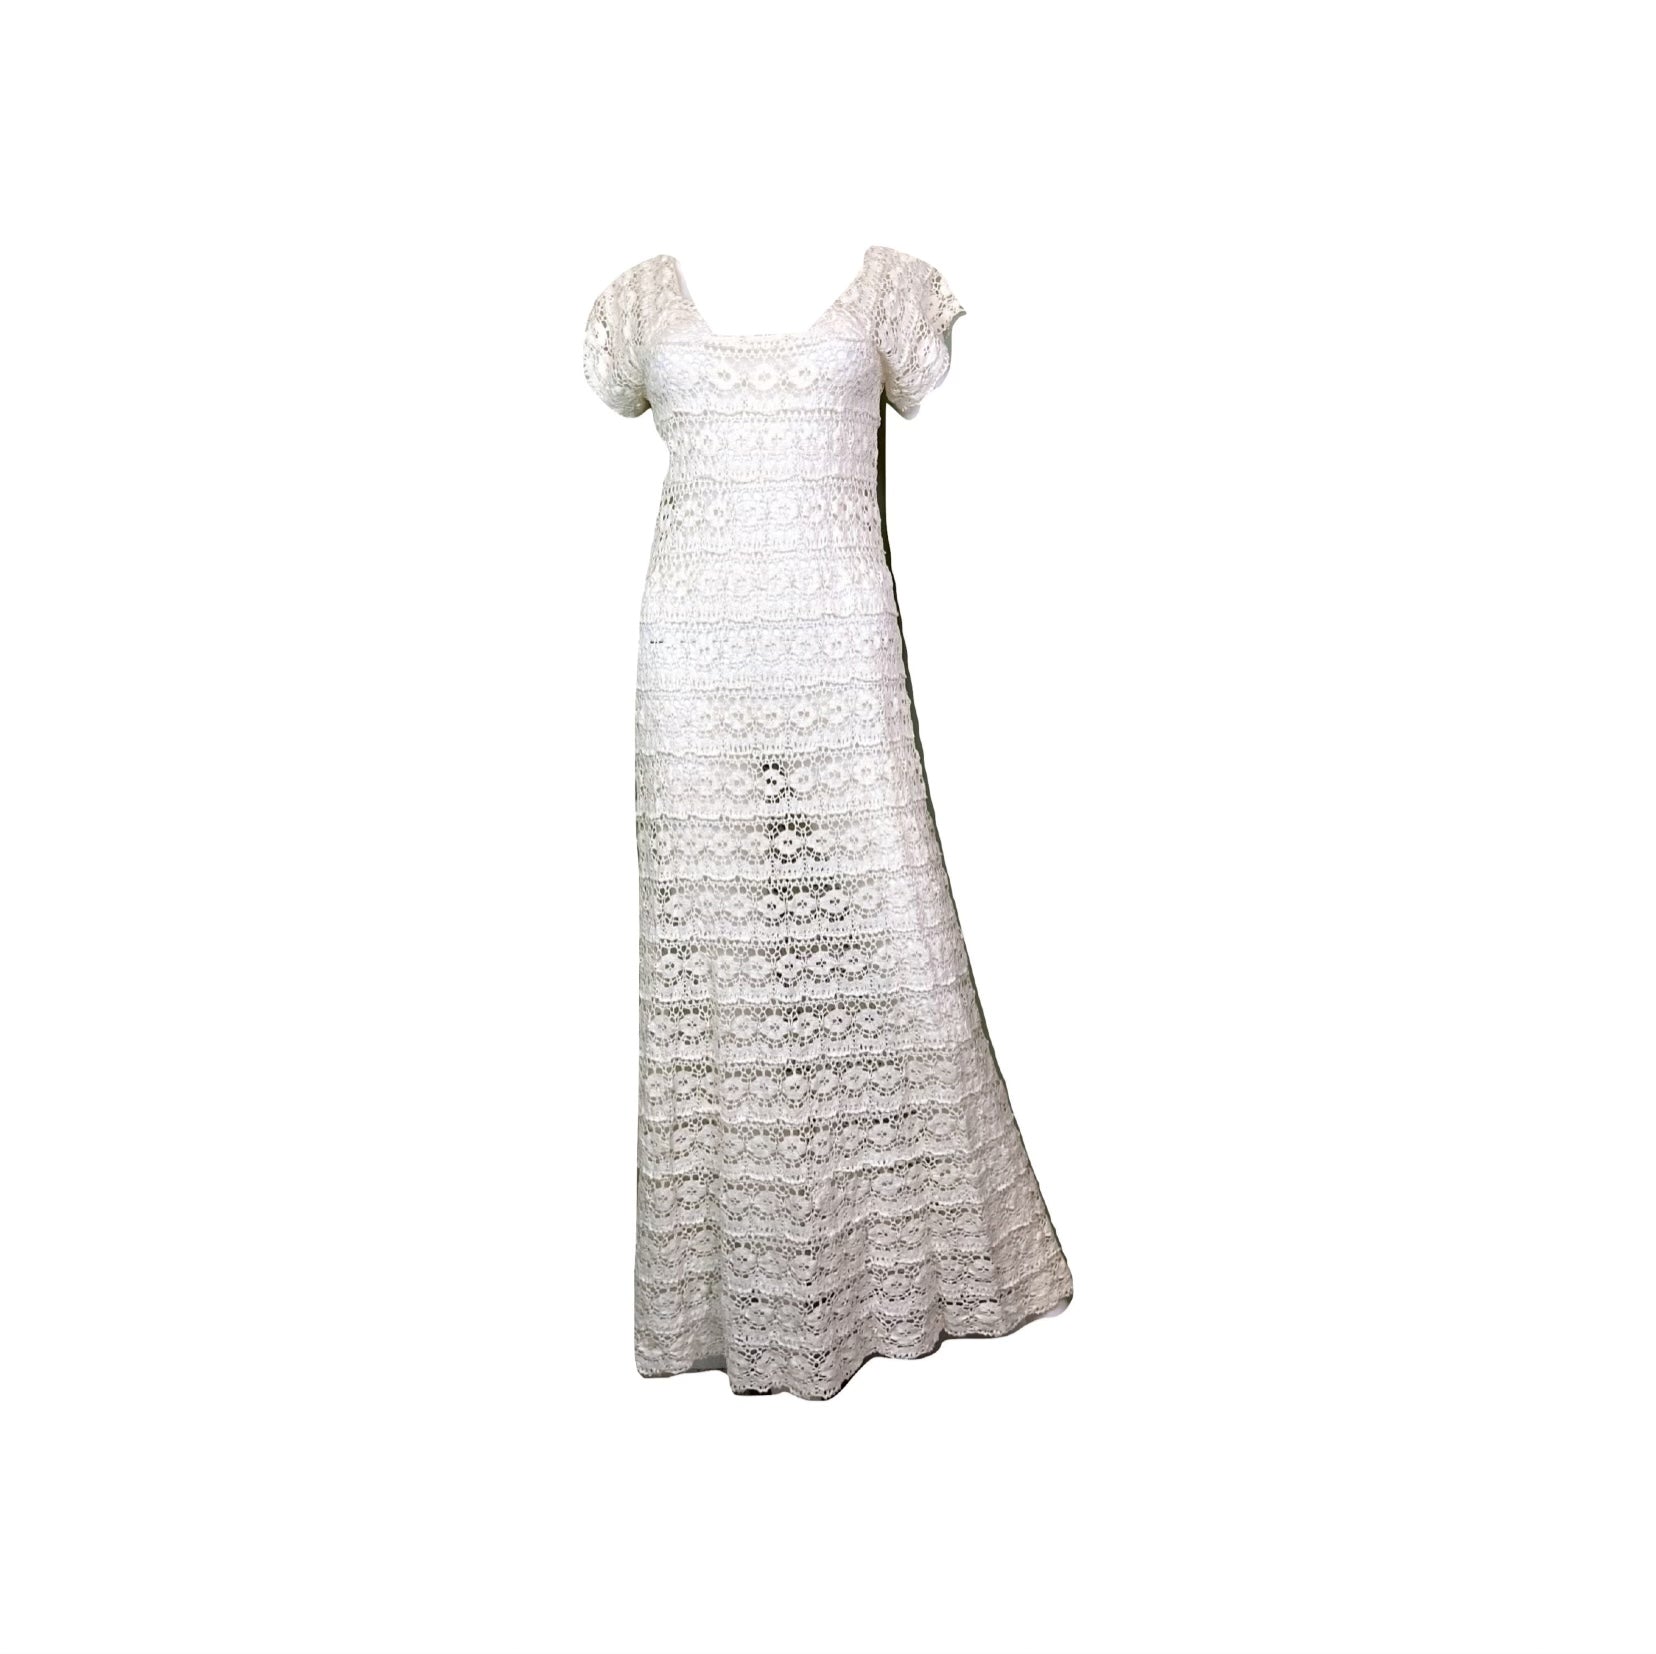 Vintage Bespoke Hand Knit Cream White Lace Crochet Gown Abby Essie